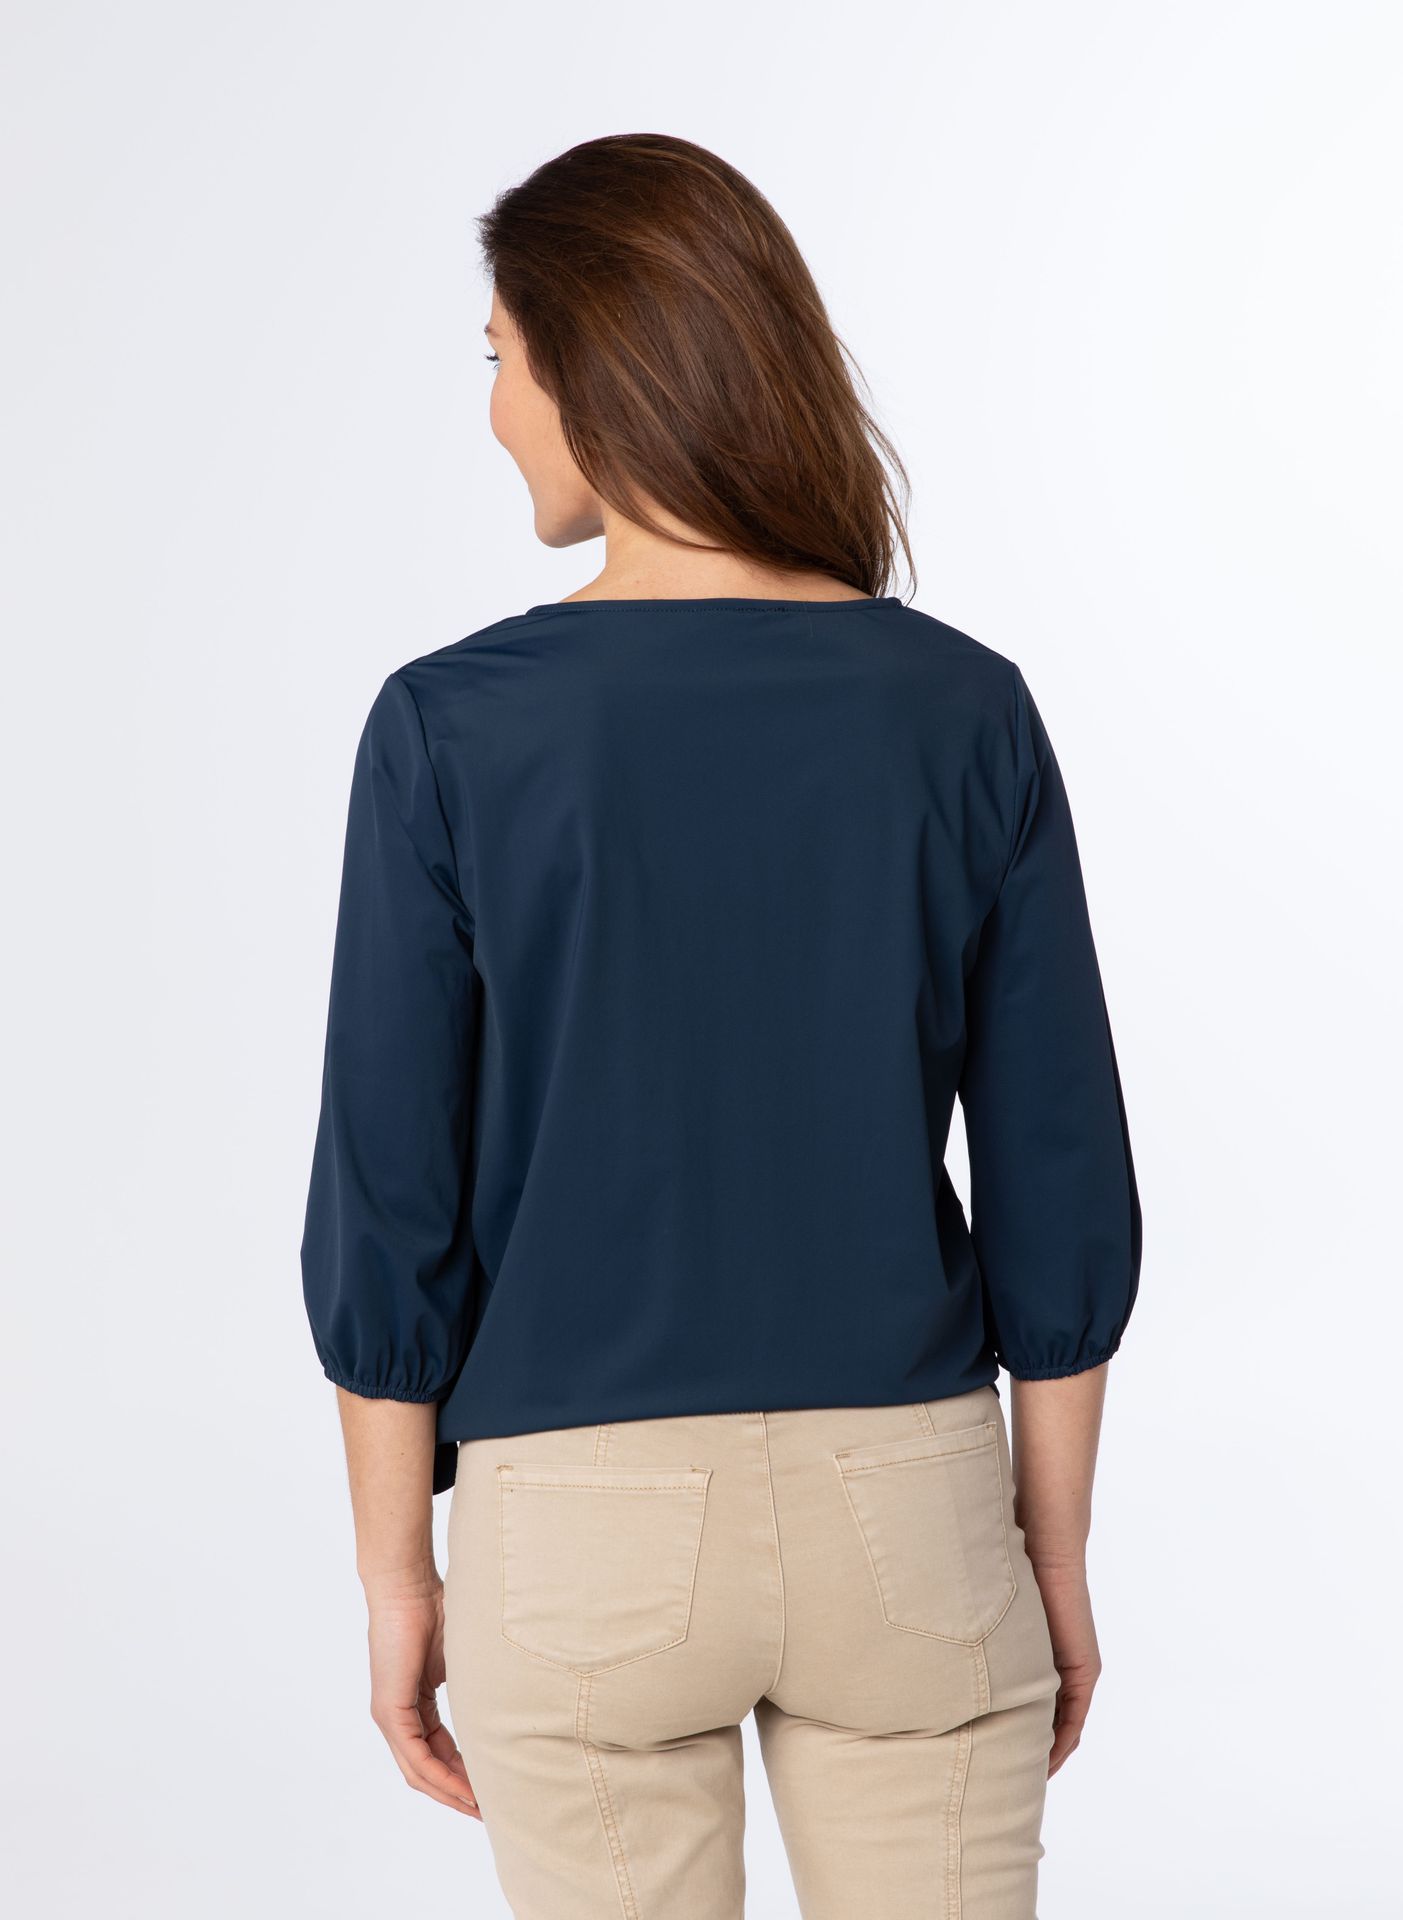 Norah Blauw shirt van travelstof dark blue 213468-499